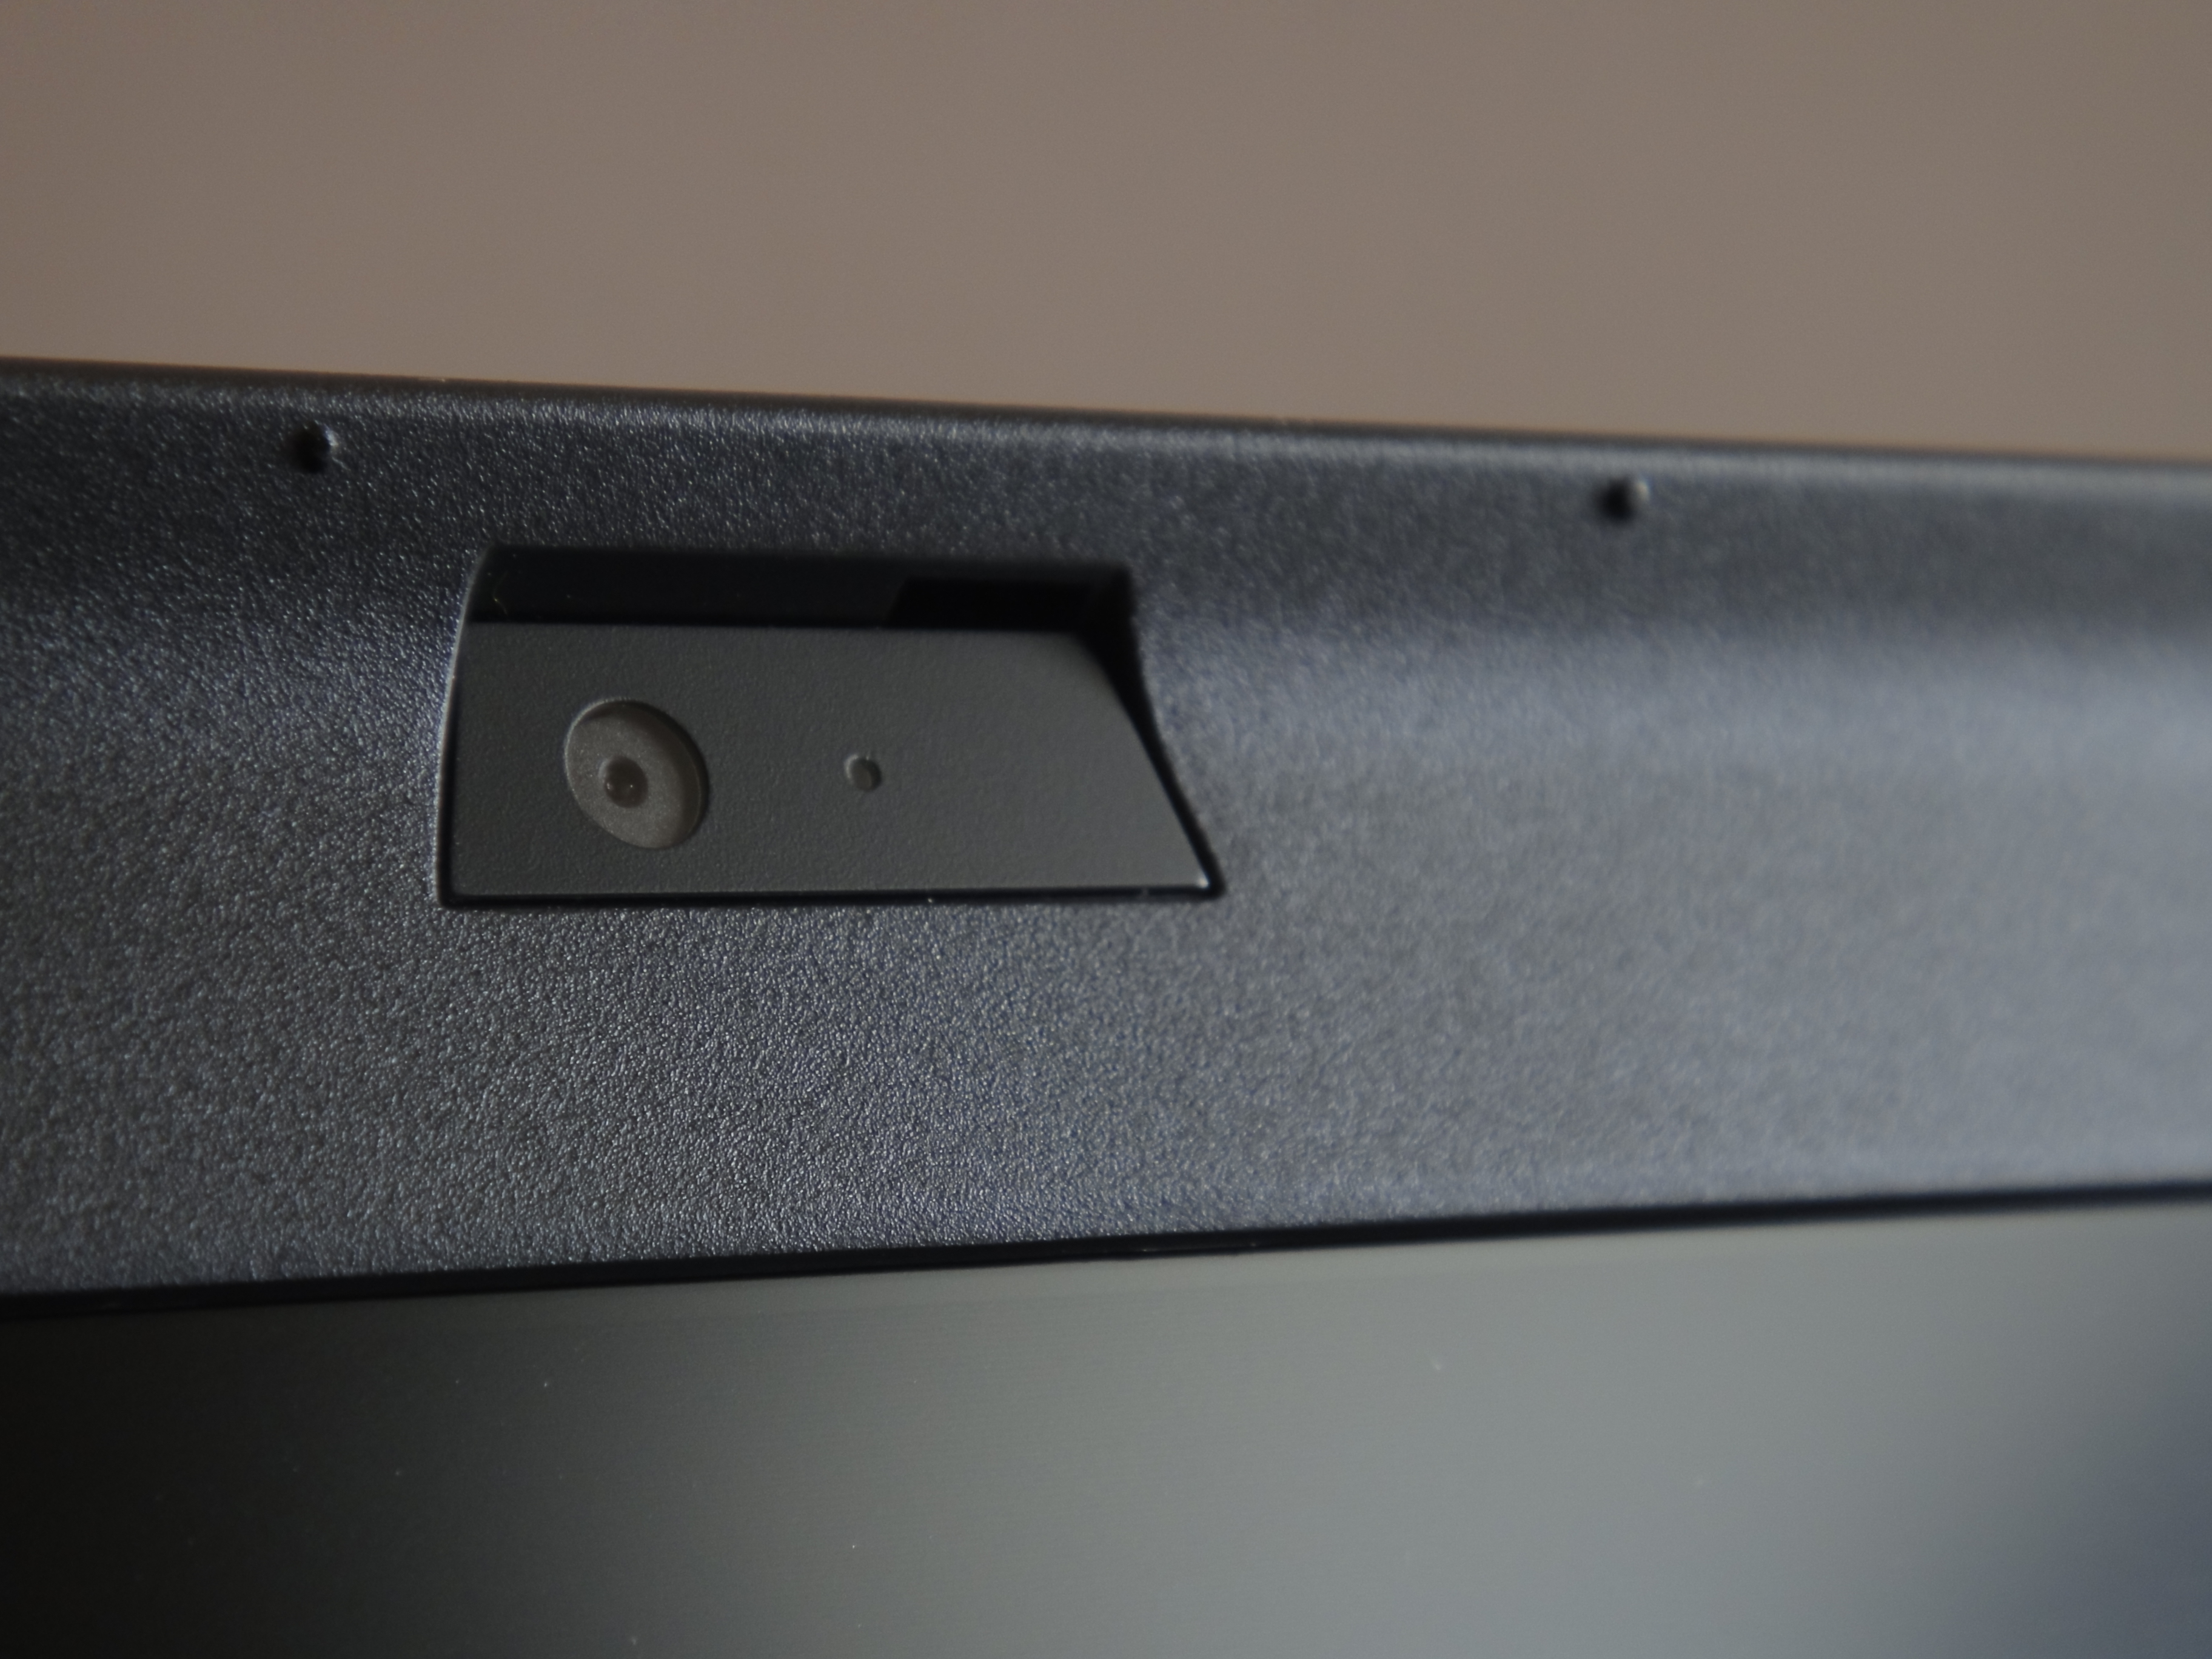 Lenovo ThinkPad X220 Hands Details, Specs Video